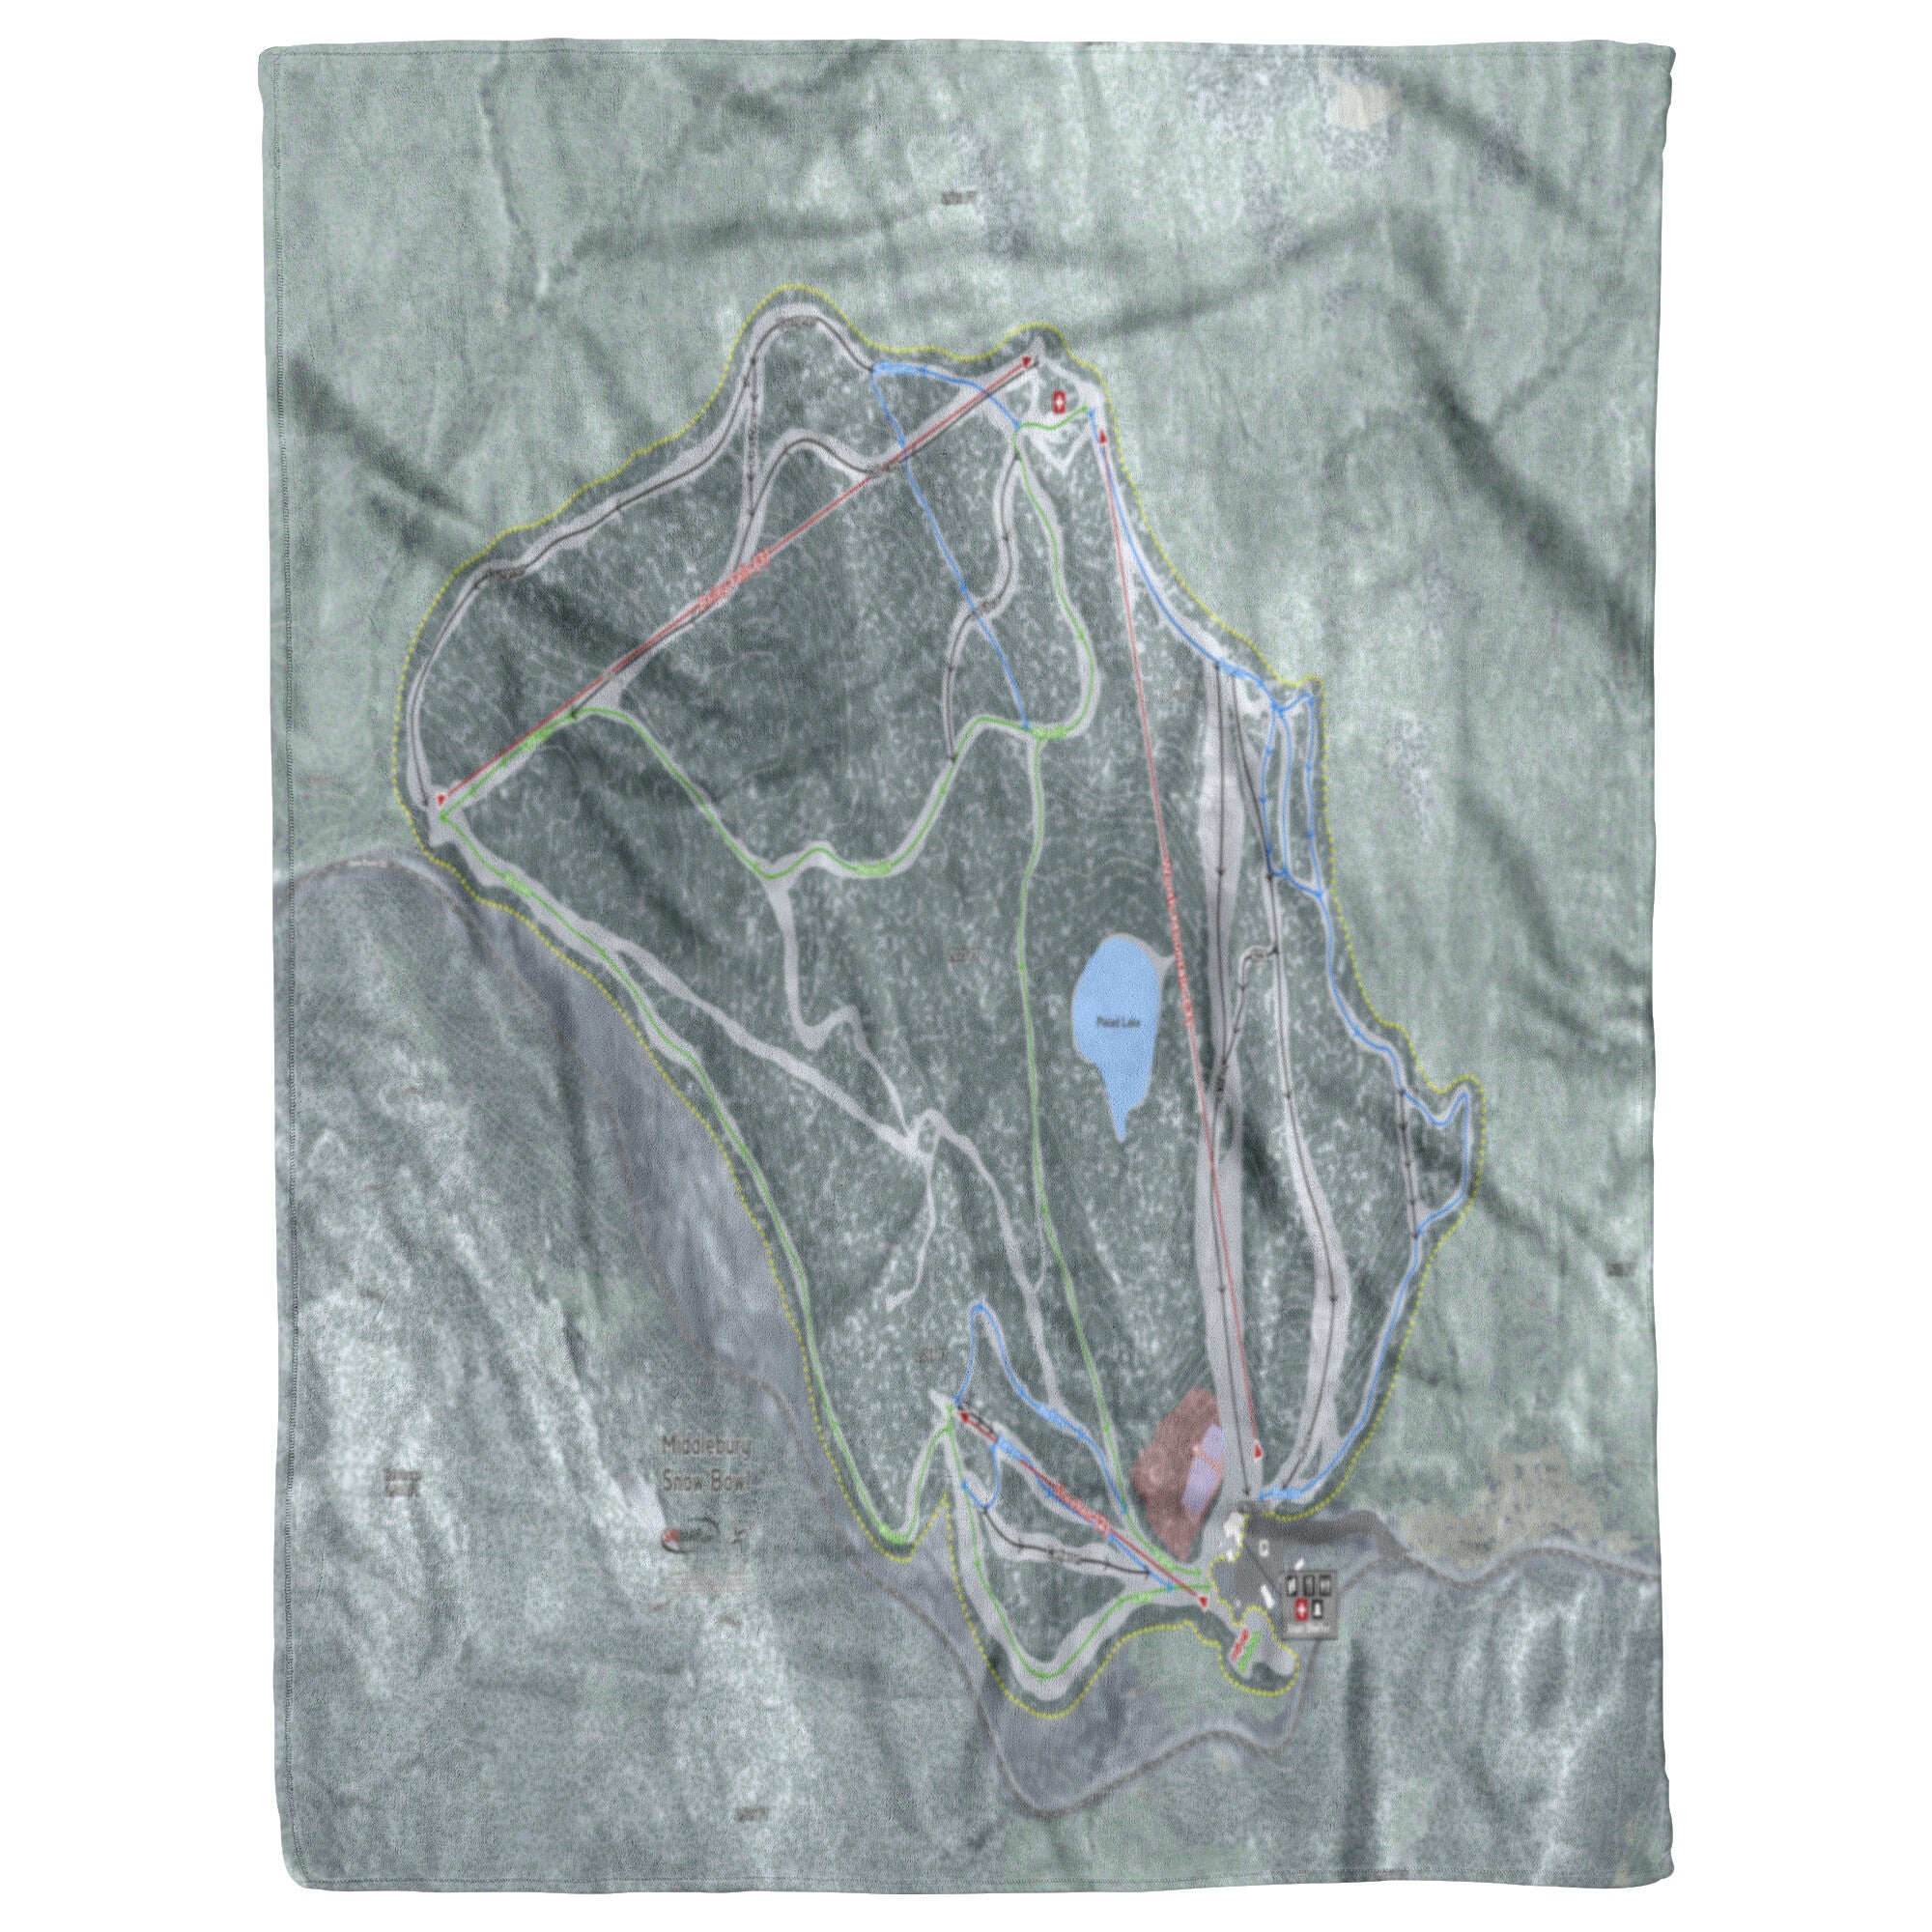 Middle Bury Snow Bowl, Vermont Ski Trail Map Blanket